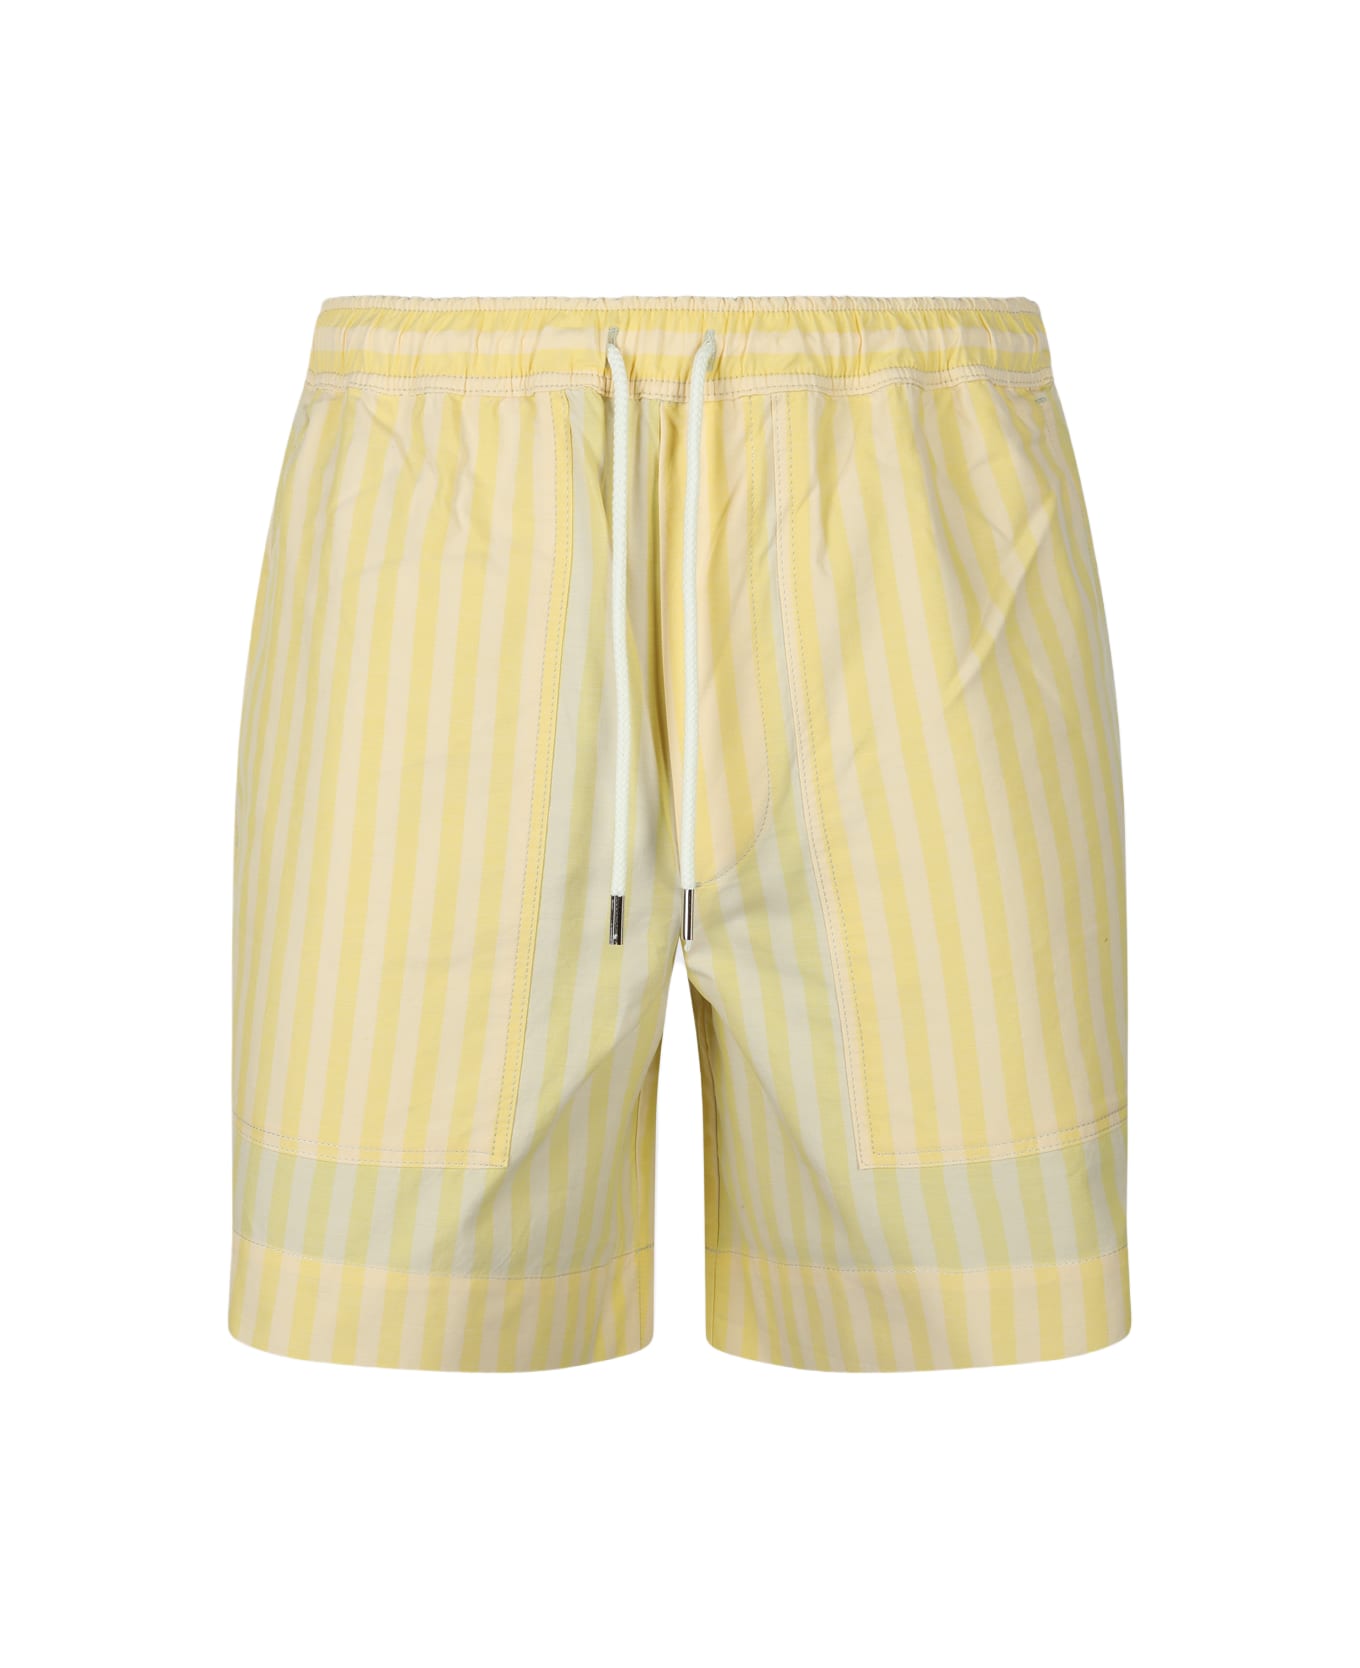 Maison Kitsuné Light Yellow Cotton Shorts - S720 LIGHT YELLOW STRIPES